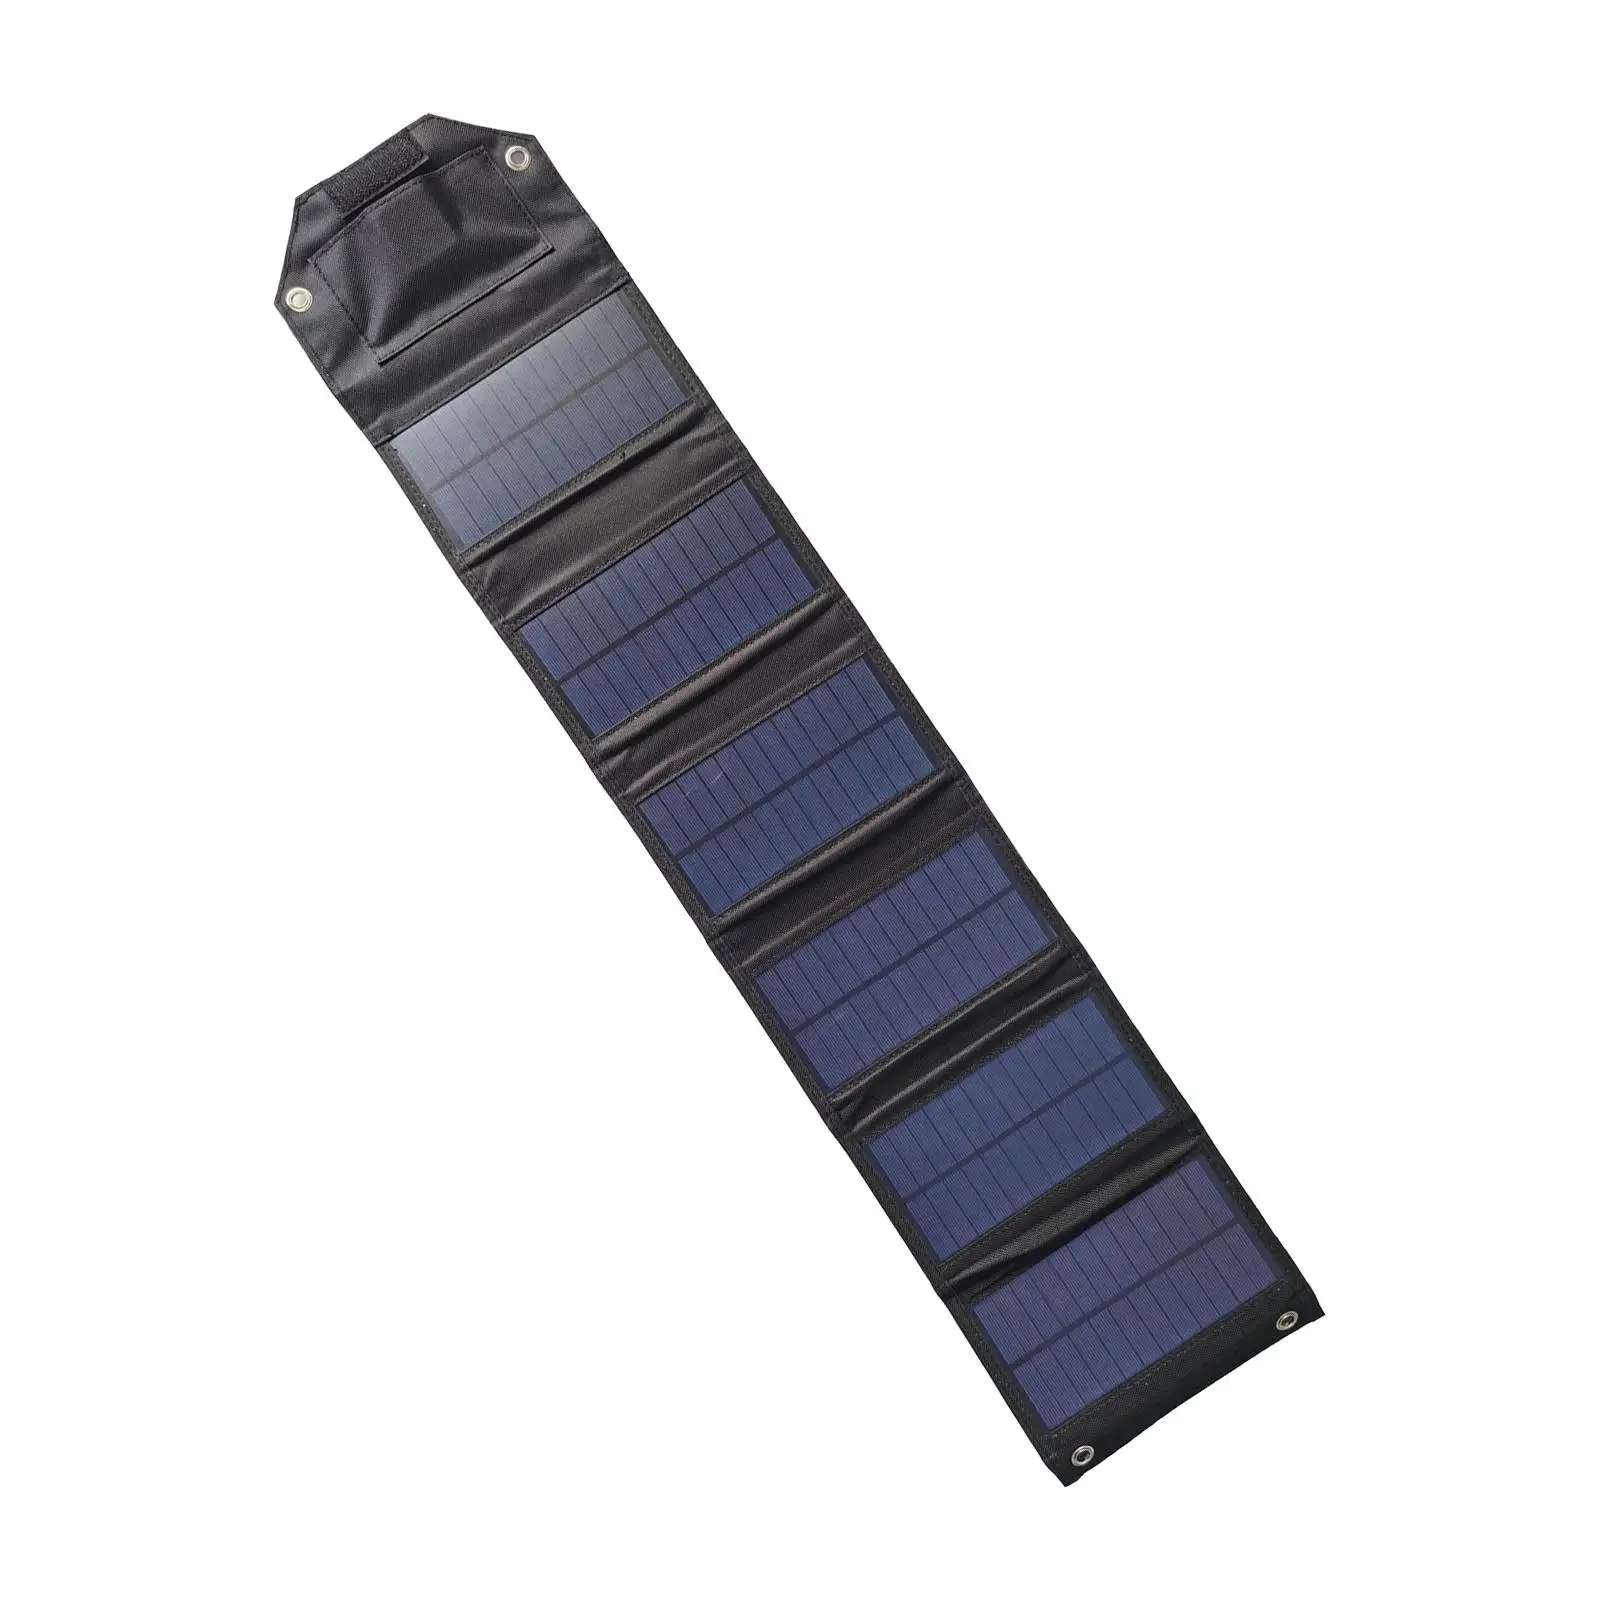 Folding Solar Panel Charger Home Portable Solar Panel 5V USB Output for Cellphone Travel Backpacking Solar Generator Laptop